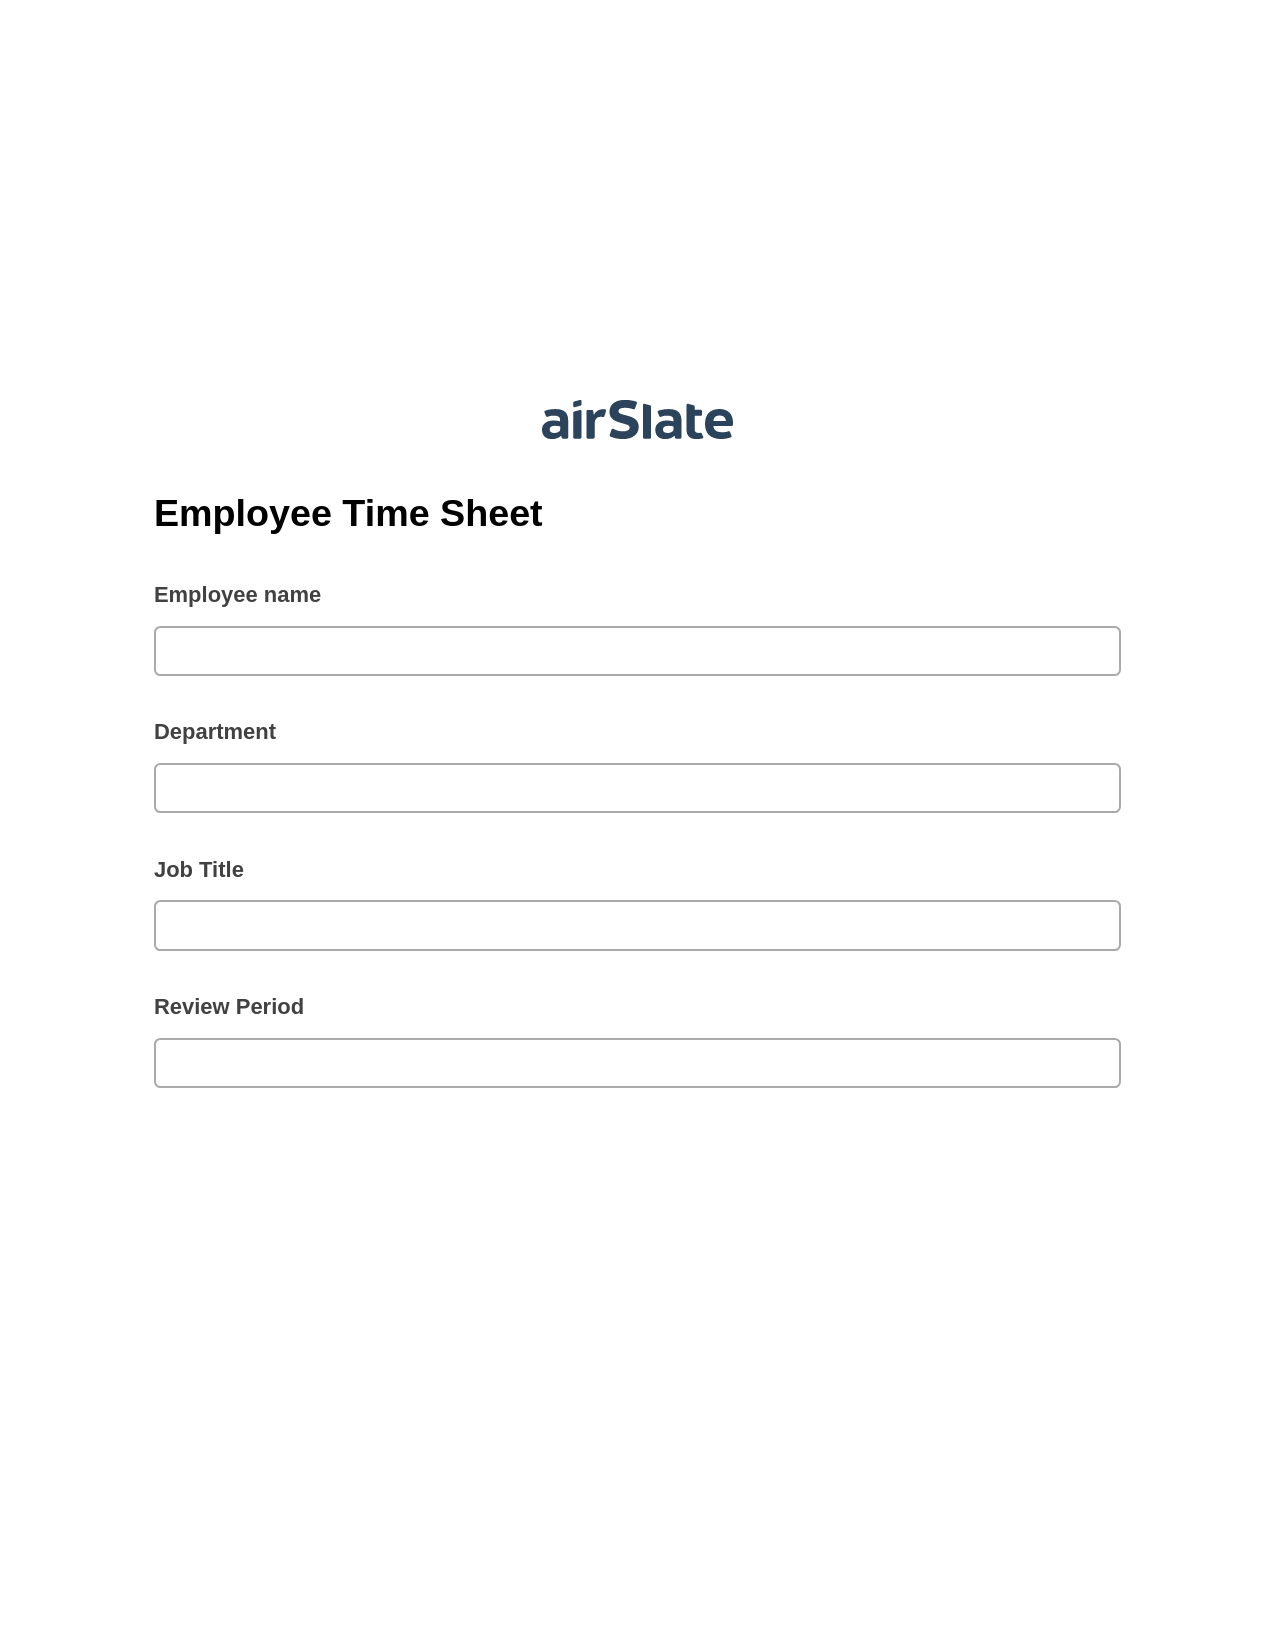 Employee Time Sheet Pre-fill from Smartsheet Bot, Update Audit Trail Bot, Export to Smartsheet